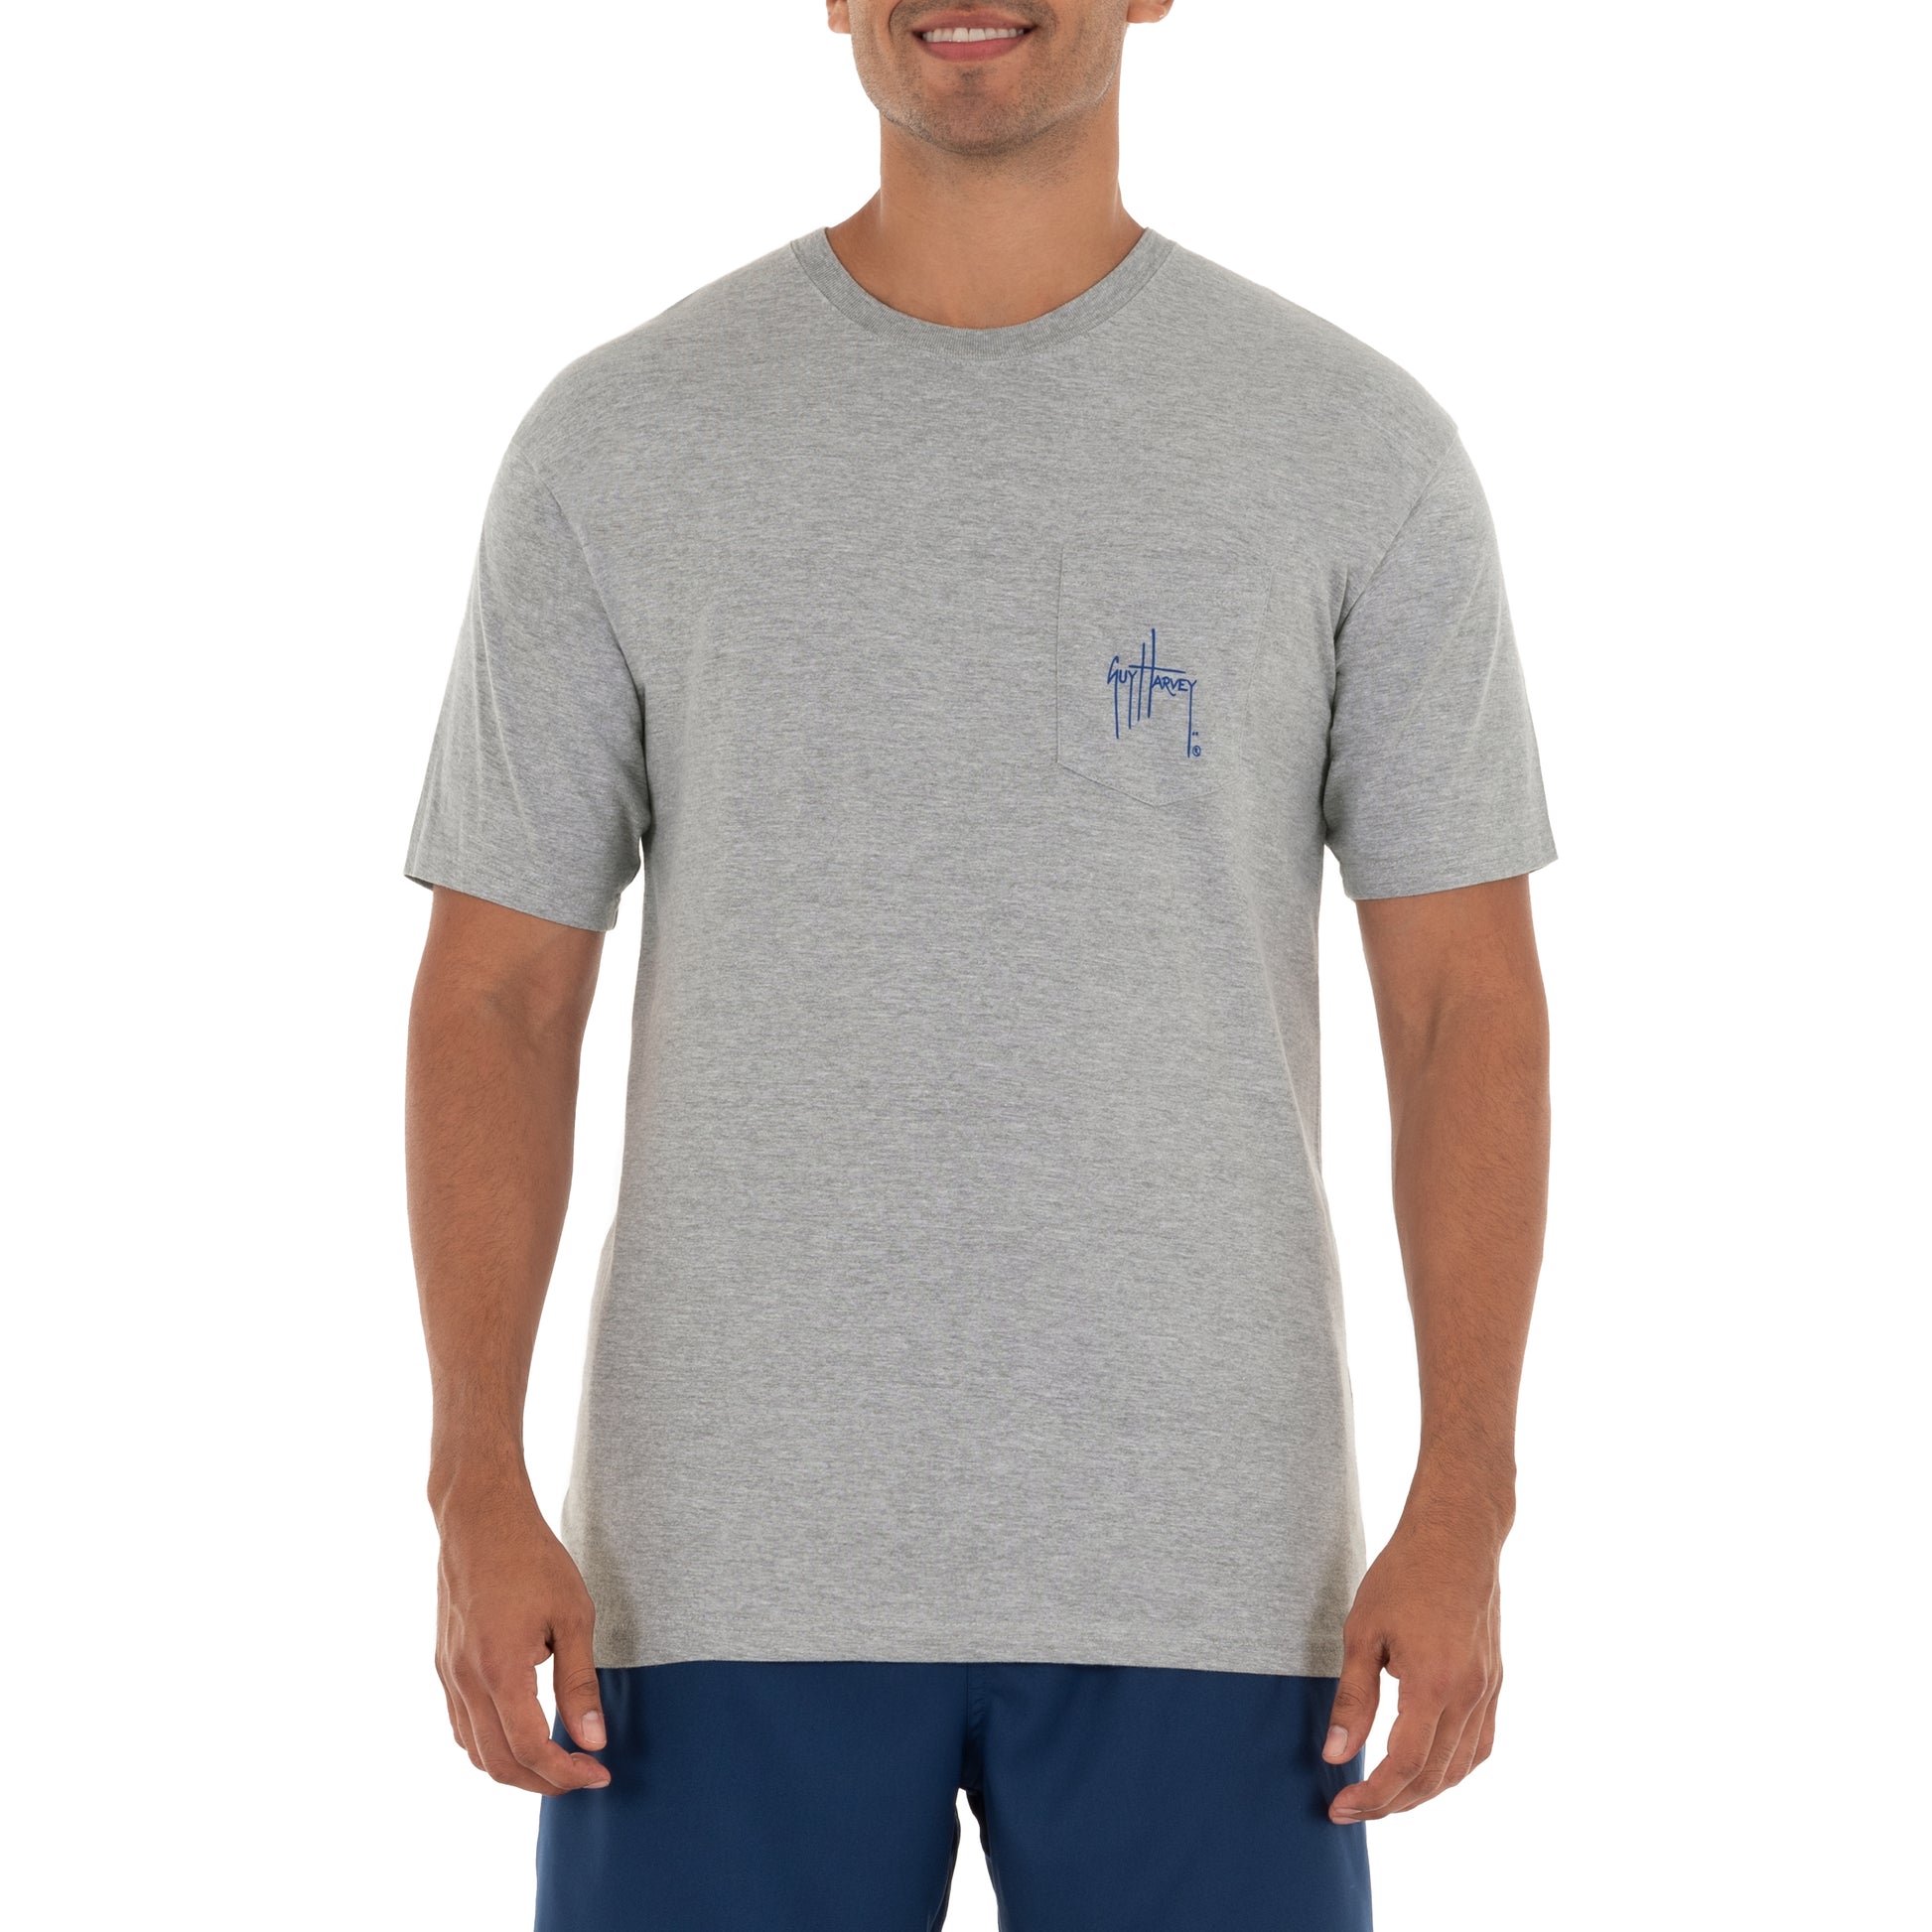 Men's Tuna Short Sleeve Pocket Grey T-Shirt View 2